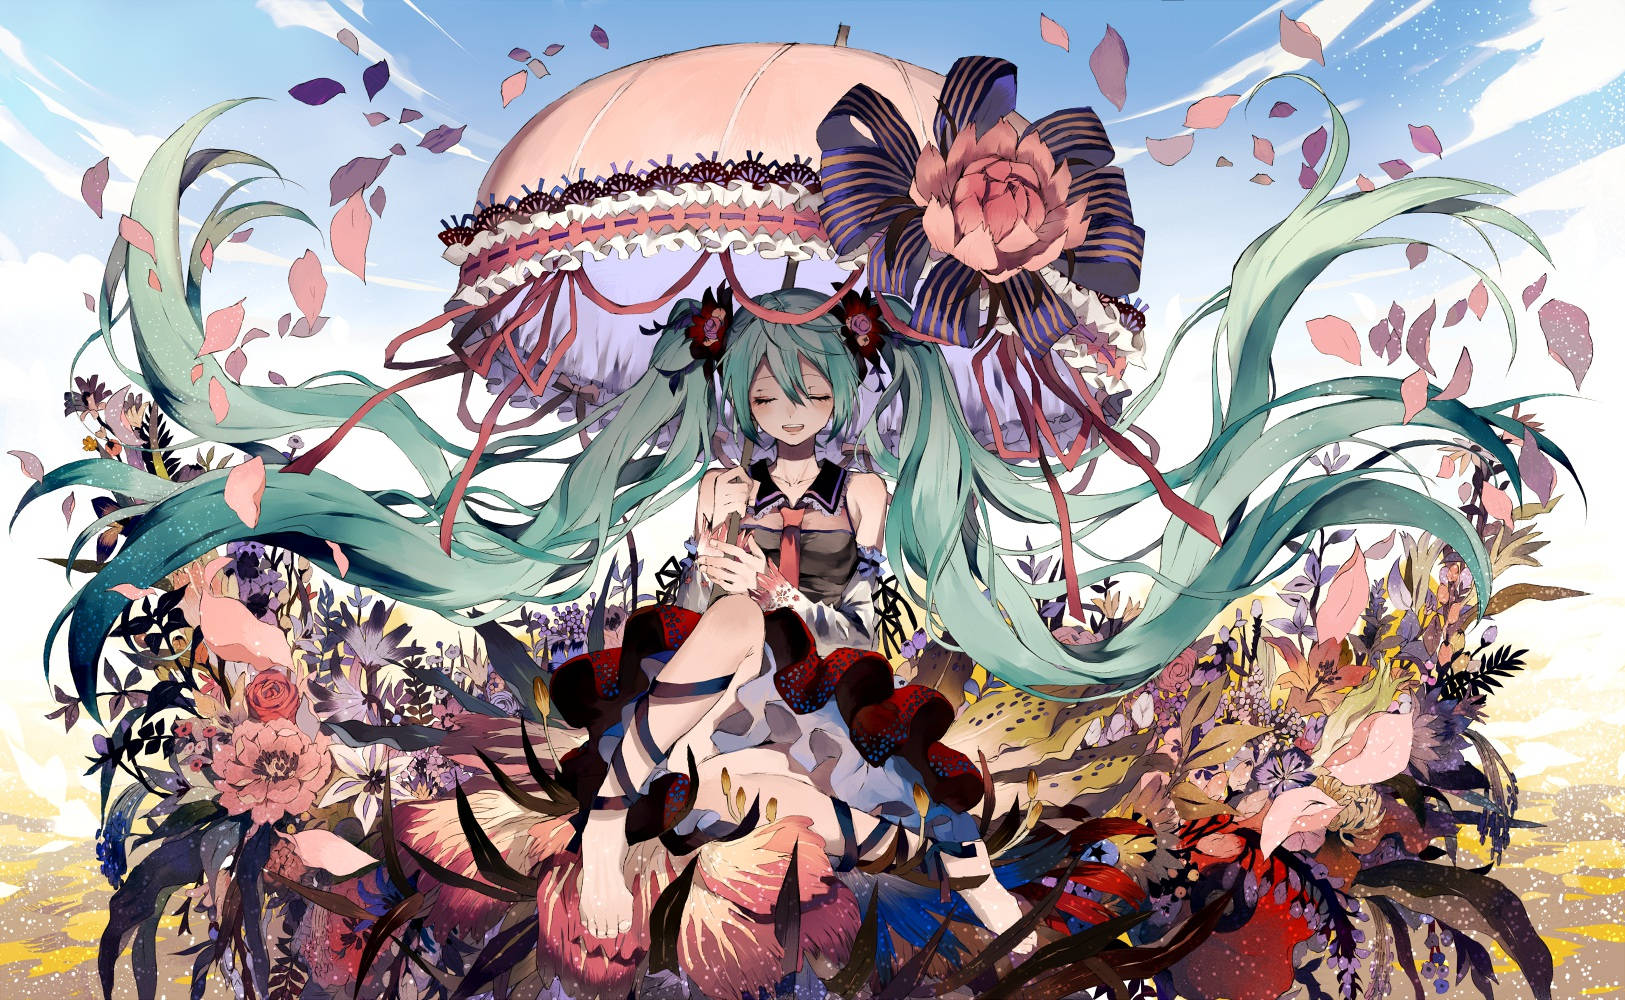 Hatsune Miku 1625X1000 Wallpaper and Background Image